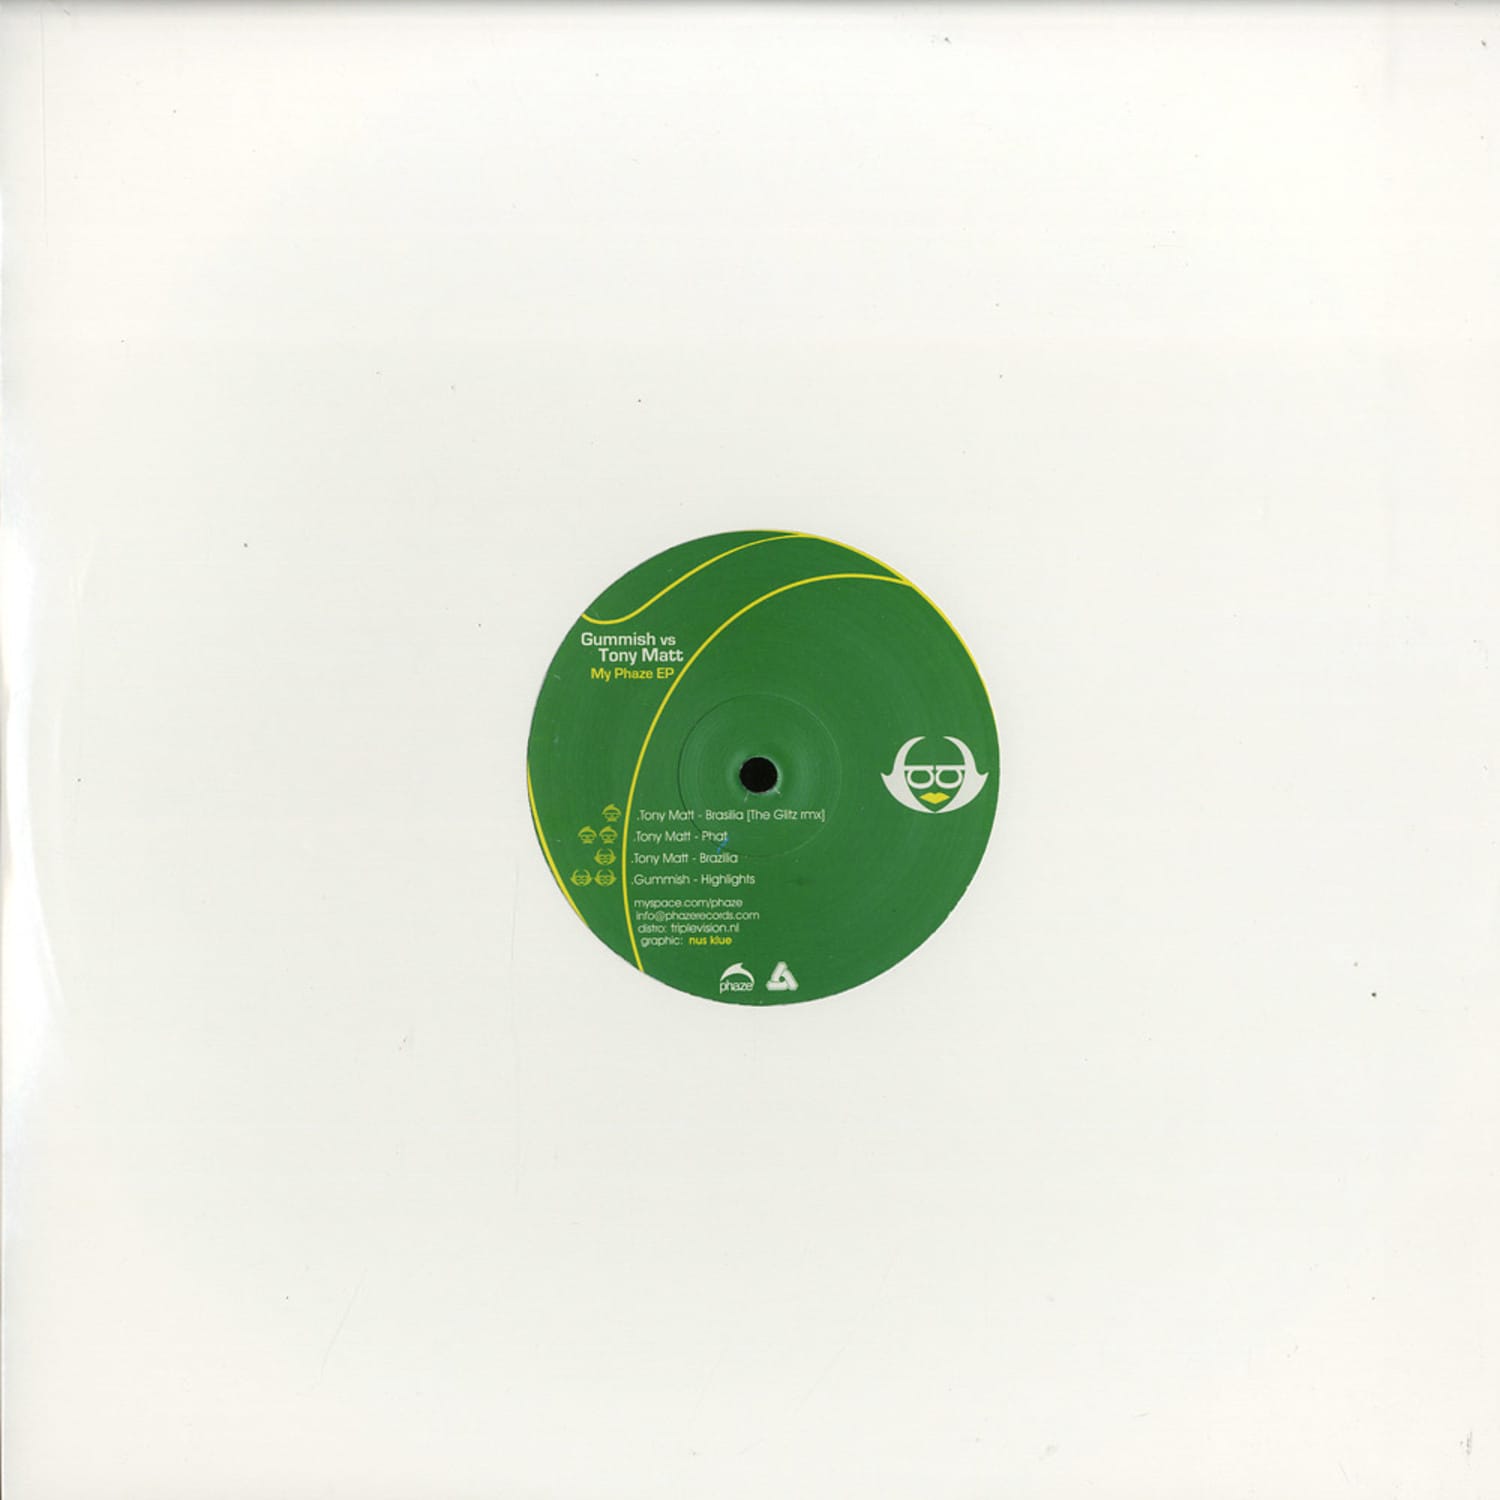 Gummish vs. Tony Matt remix The Glitz - MY PHAZE EP